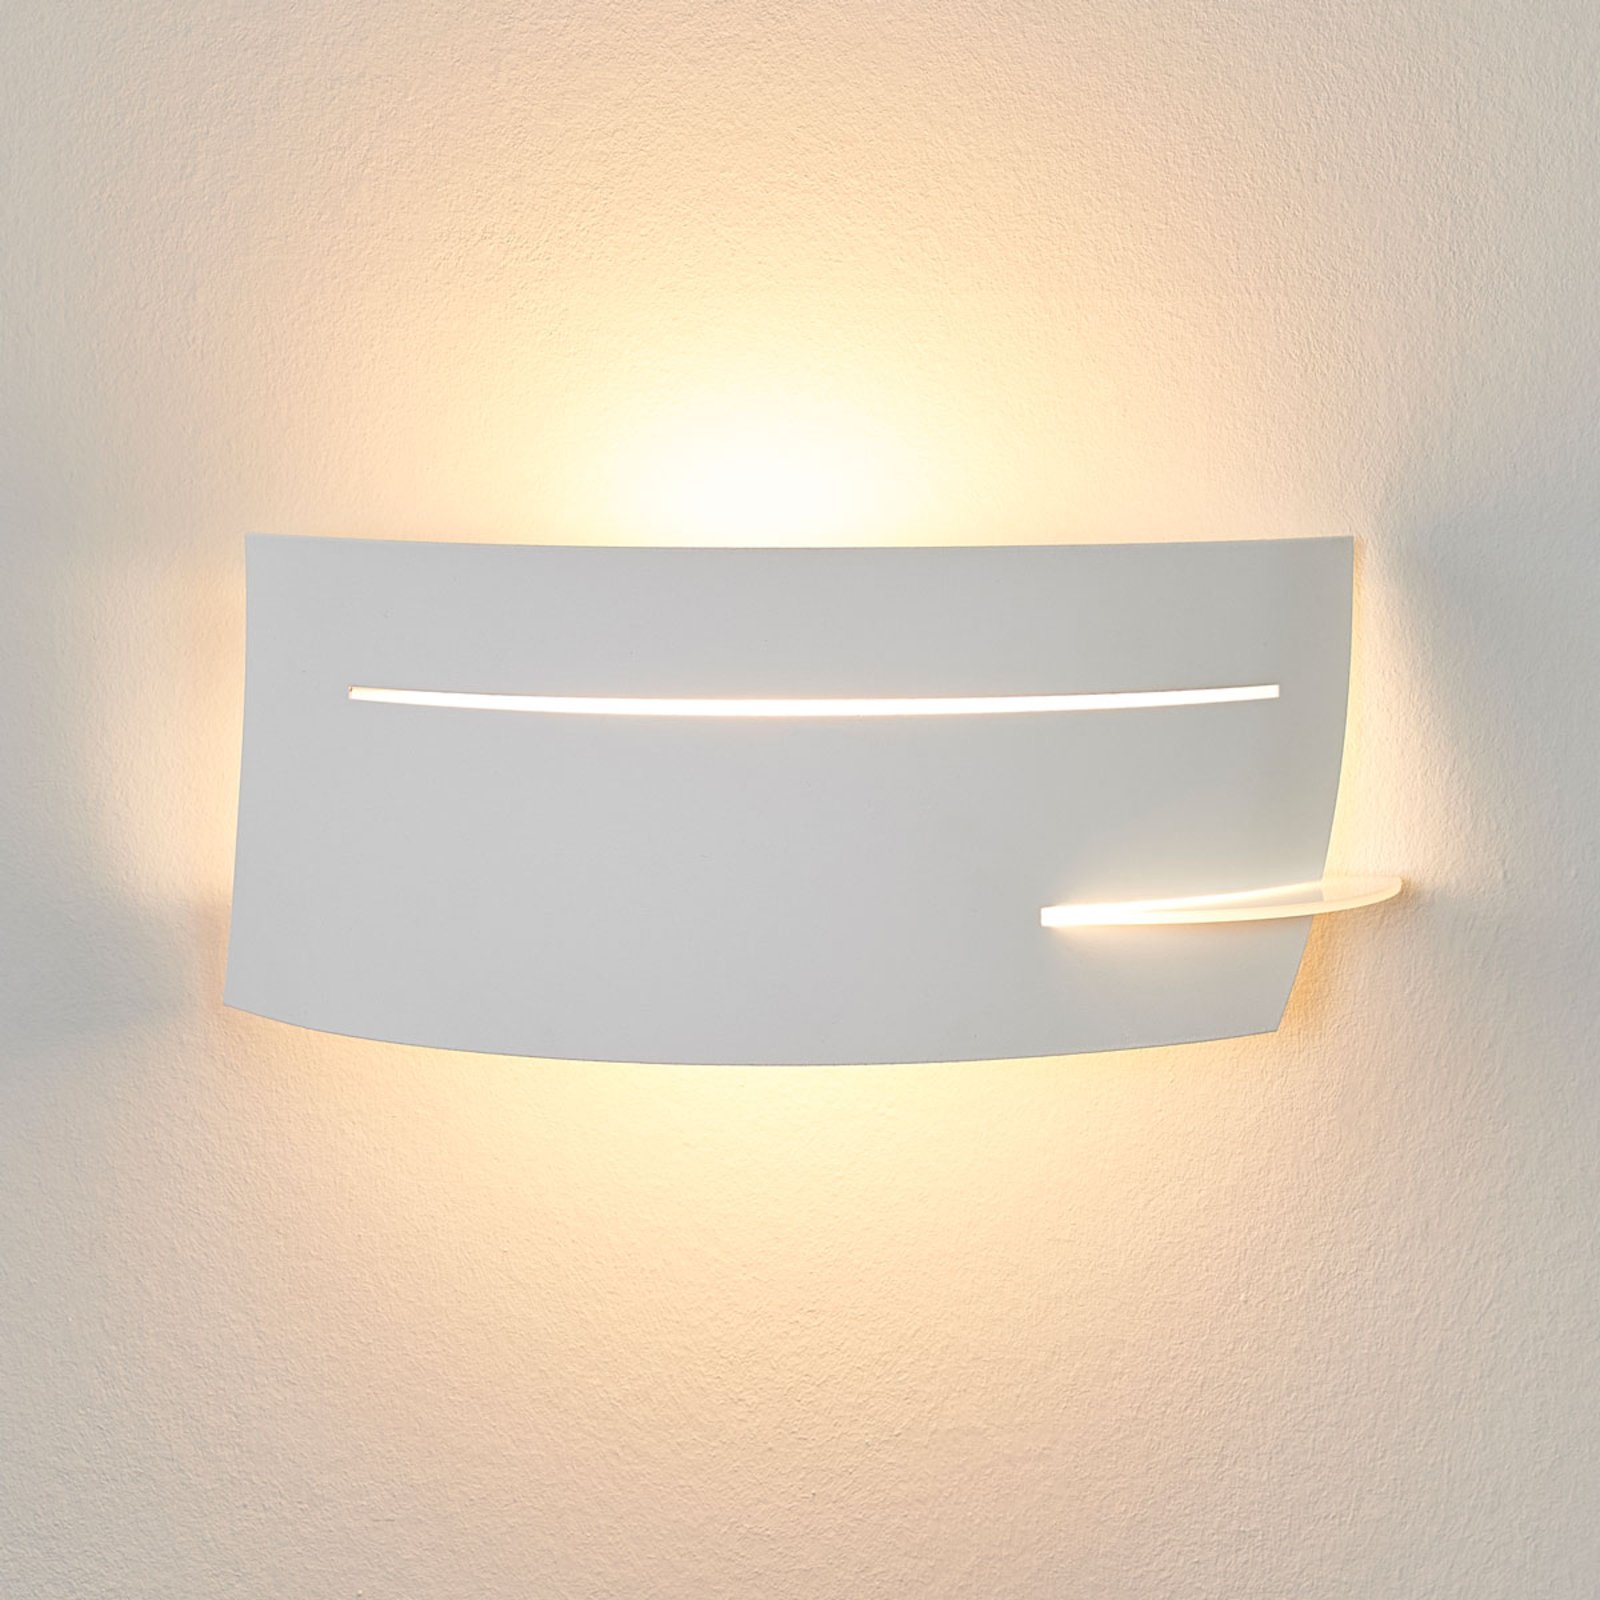 Discreet wall light Keyron in white